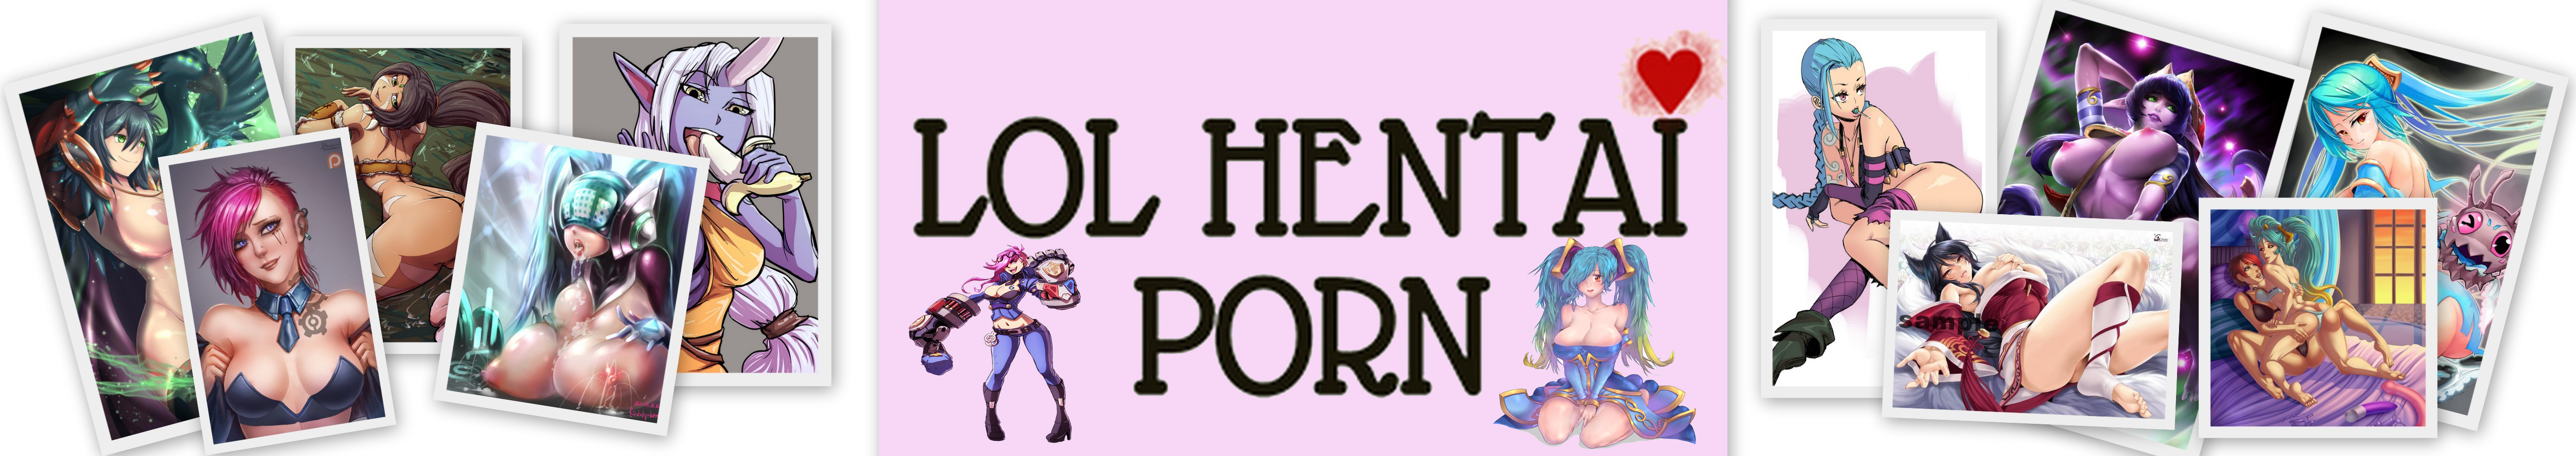 lol hentai porn – League of legends xxx